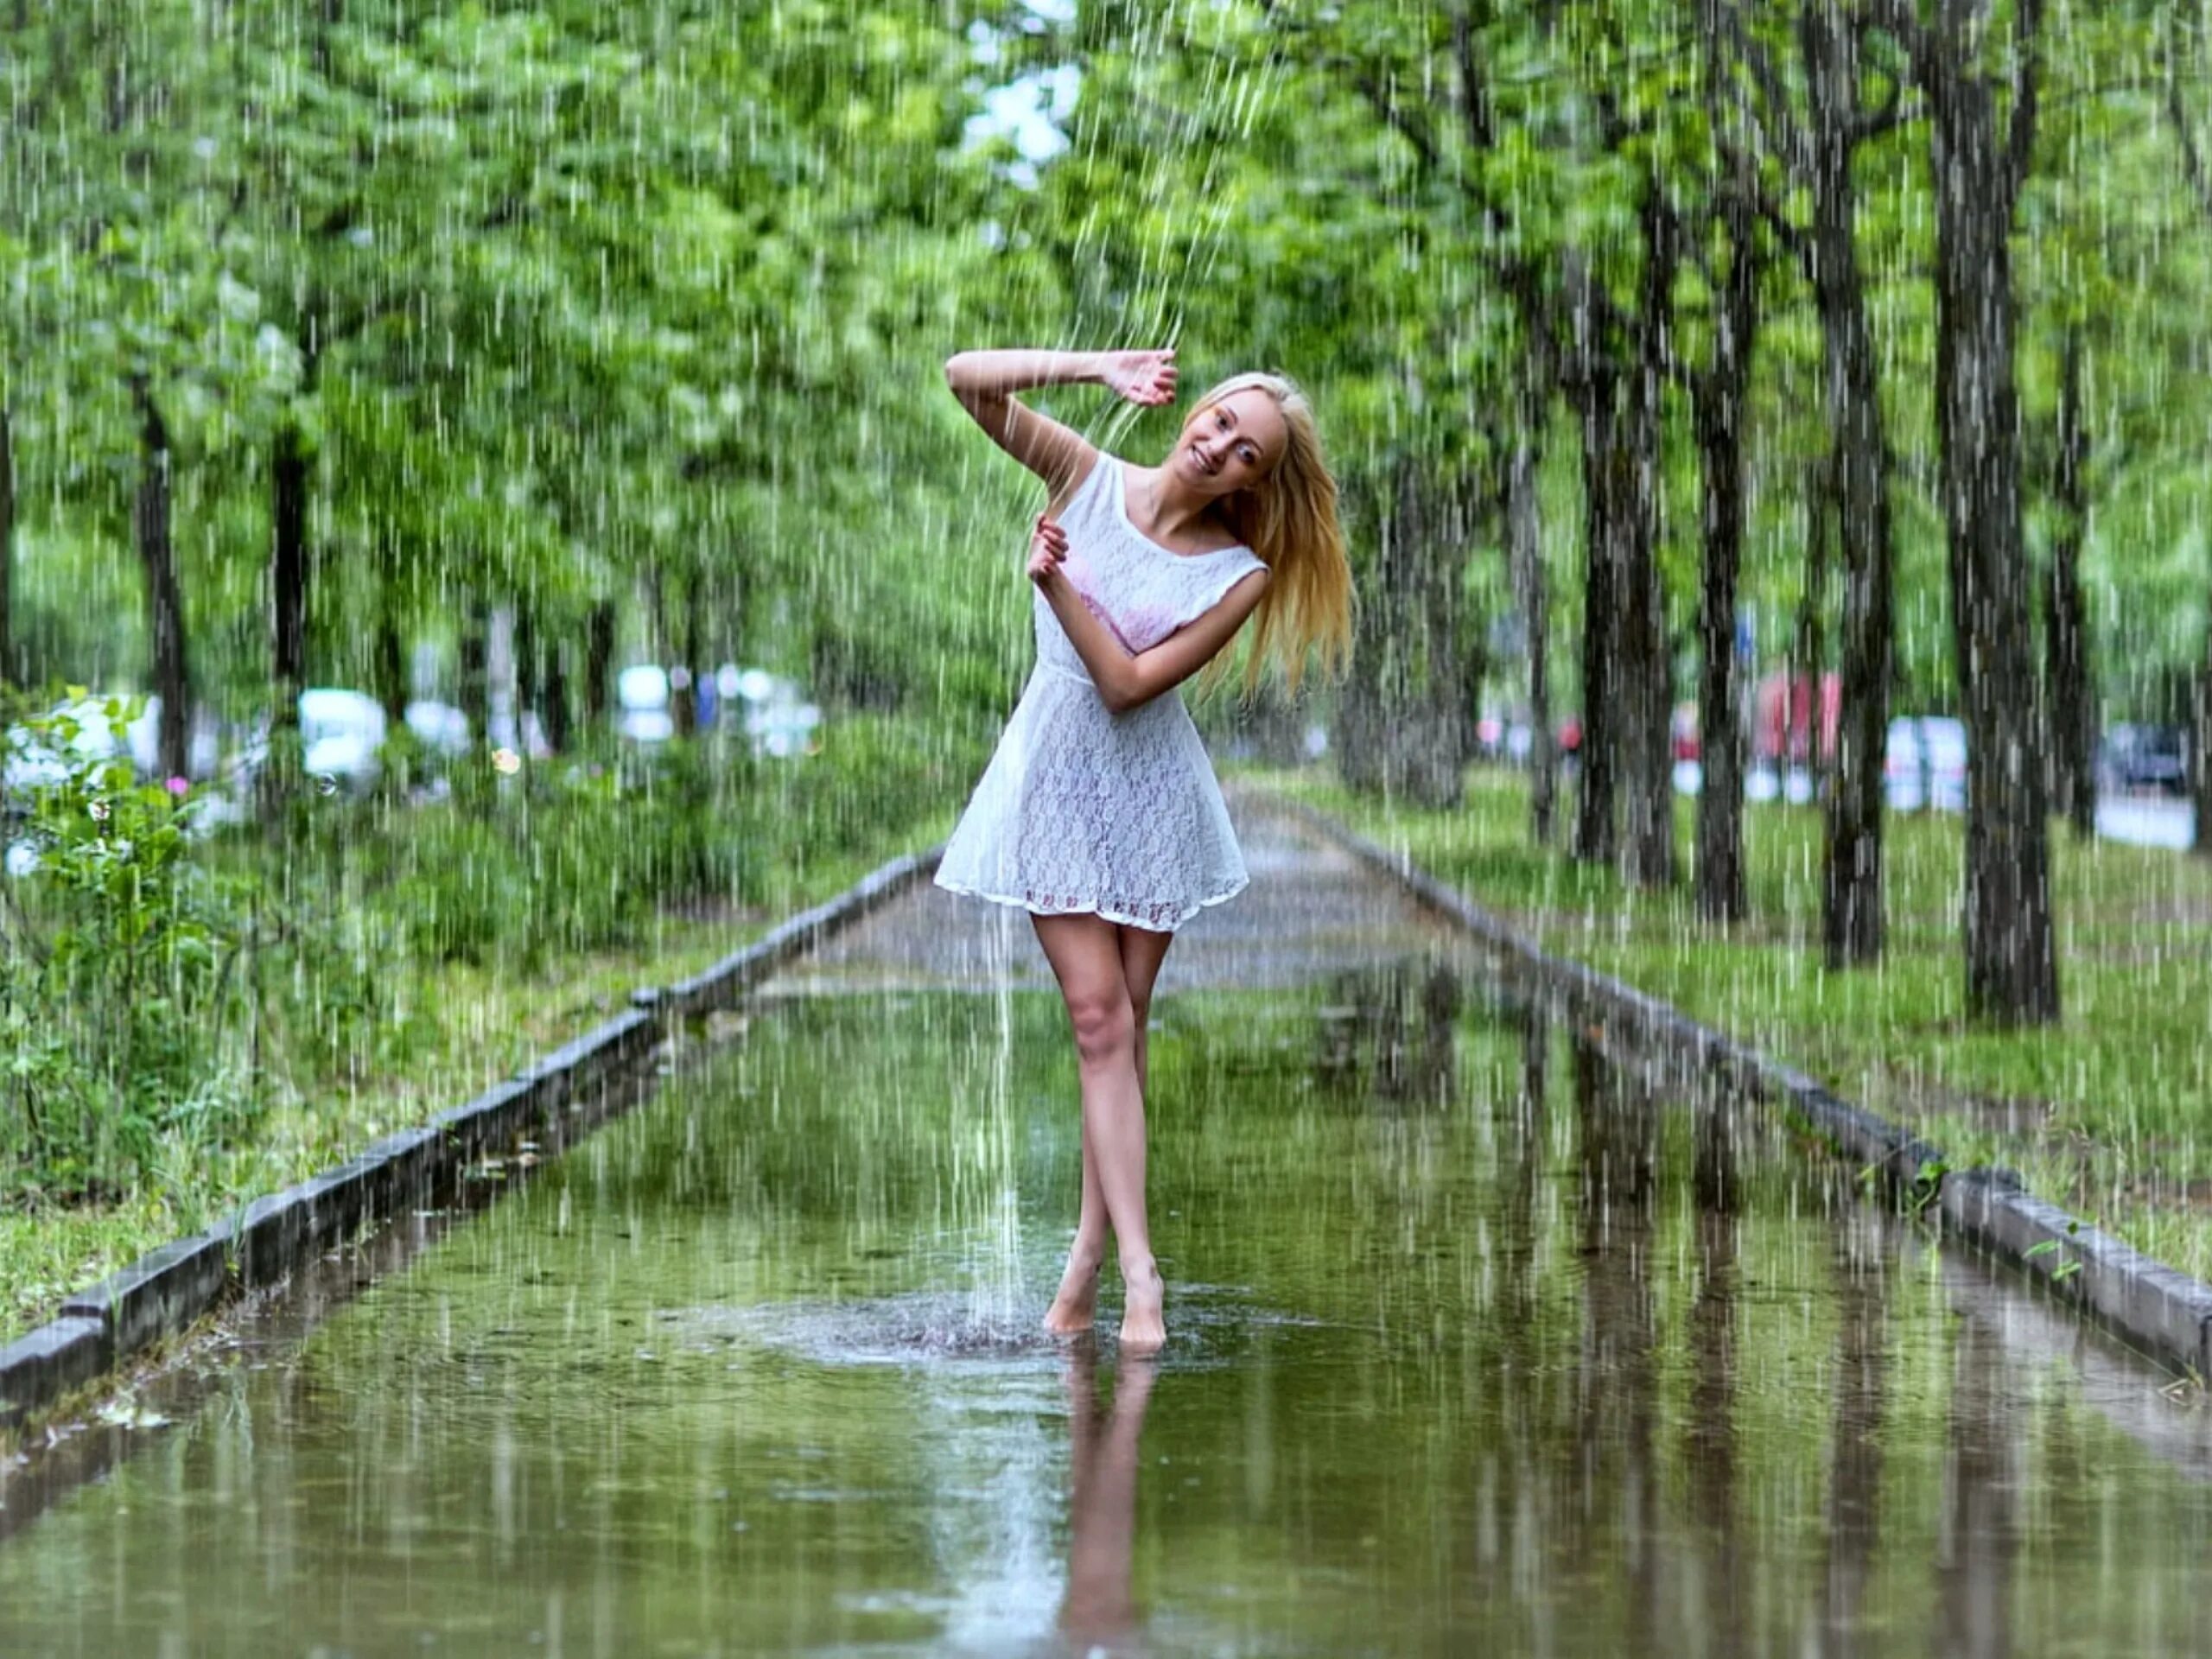 Песня гуляло лето. Летний дождь. Девушка под дождем. Девушка дождь. Весенний ливень.